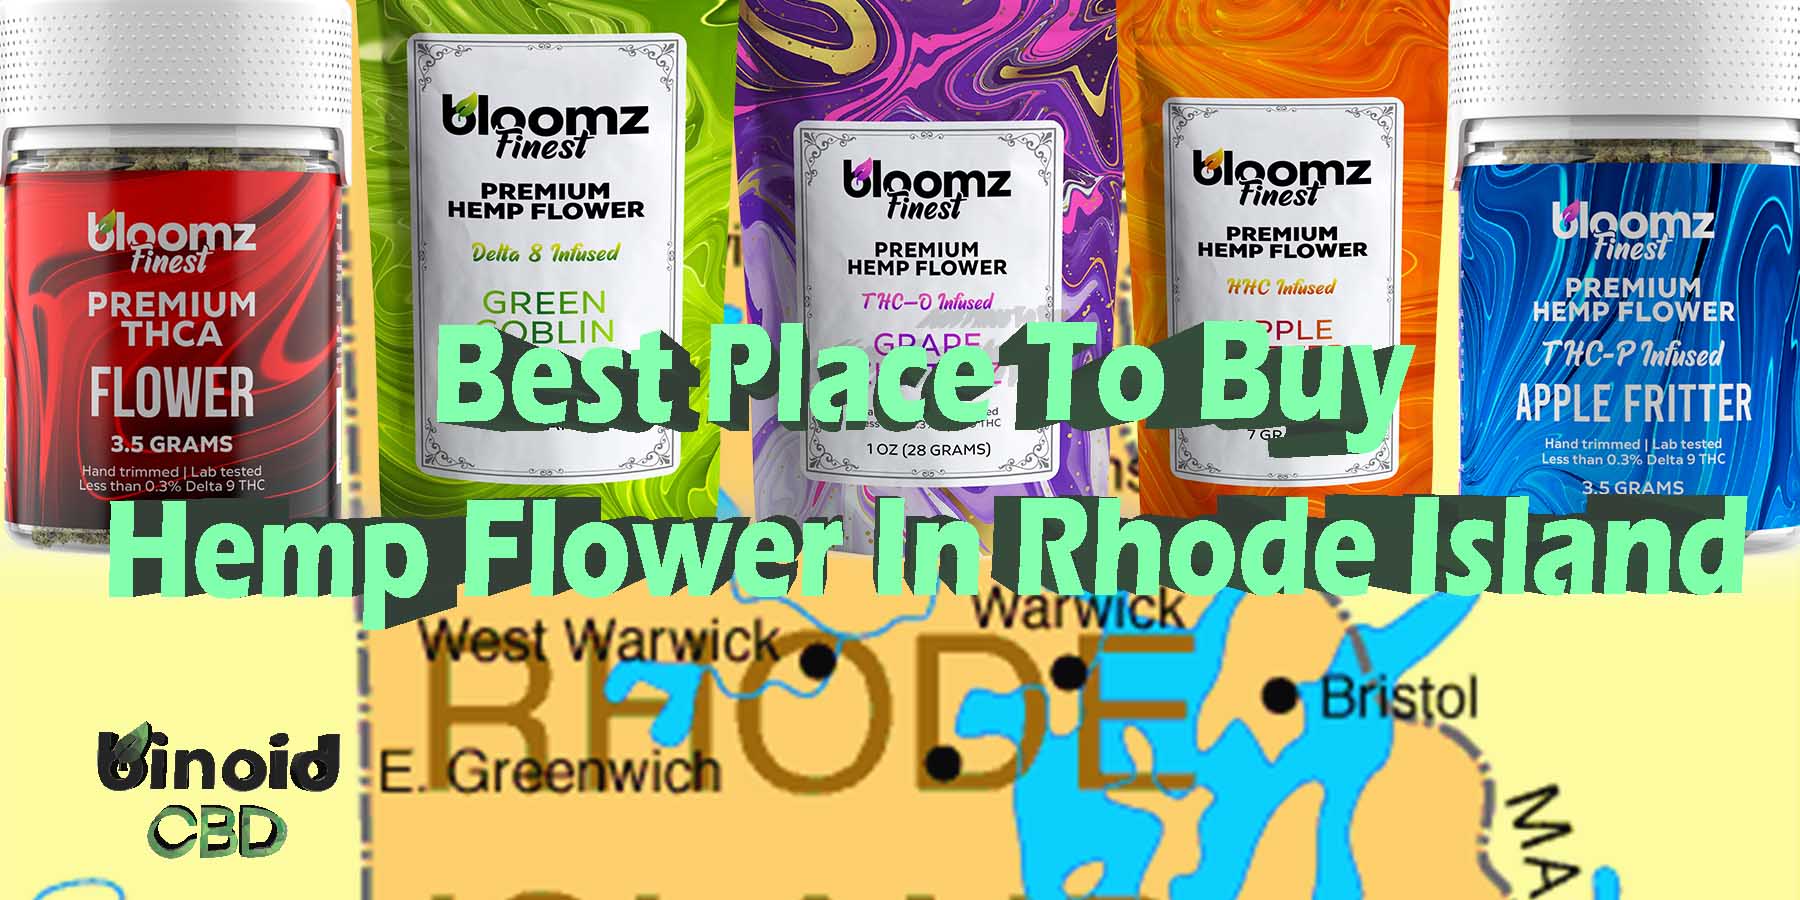 Buy Hemp Flower Delta 8 THCP HHC Rhode Island Joints PreRolls Get Online Near Me For Sale Best Brand Strongest Real Legal Store Shop Reddit